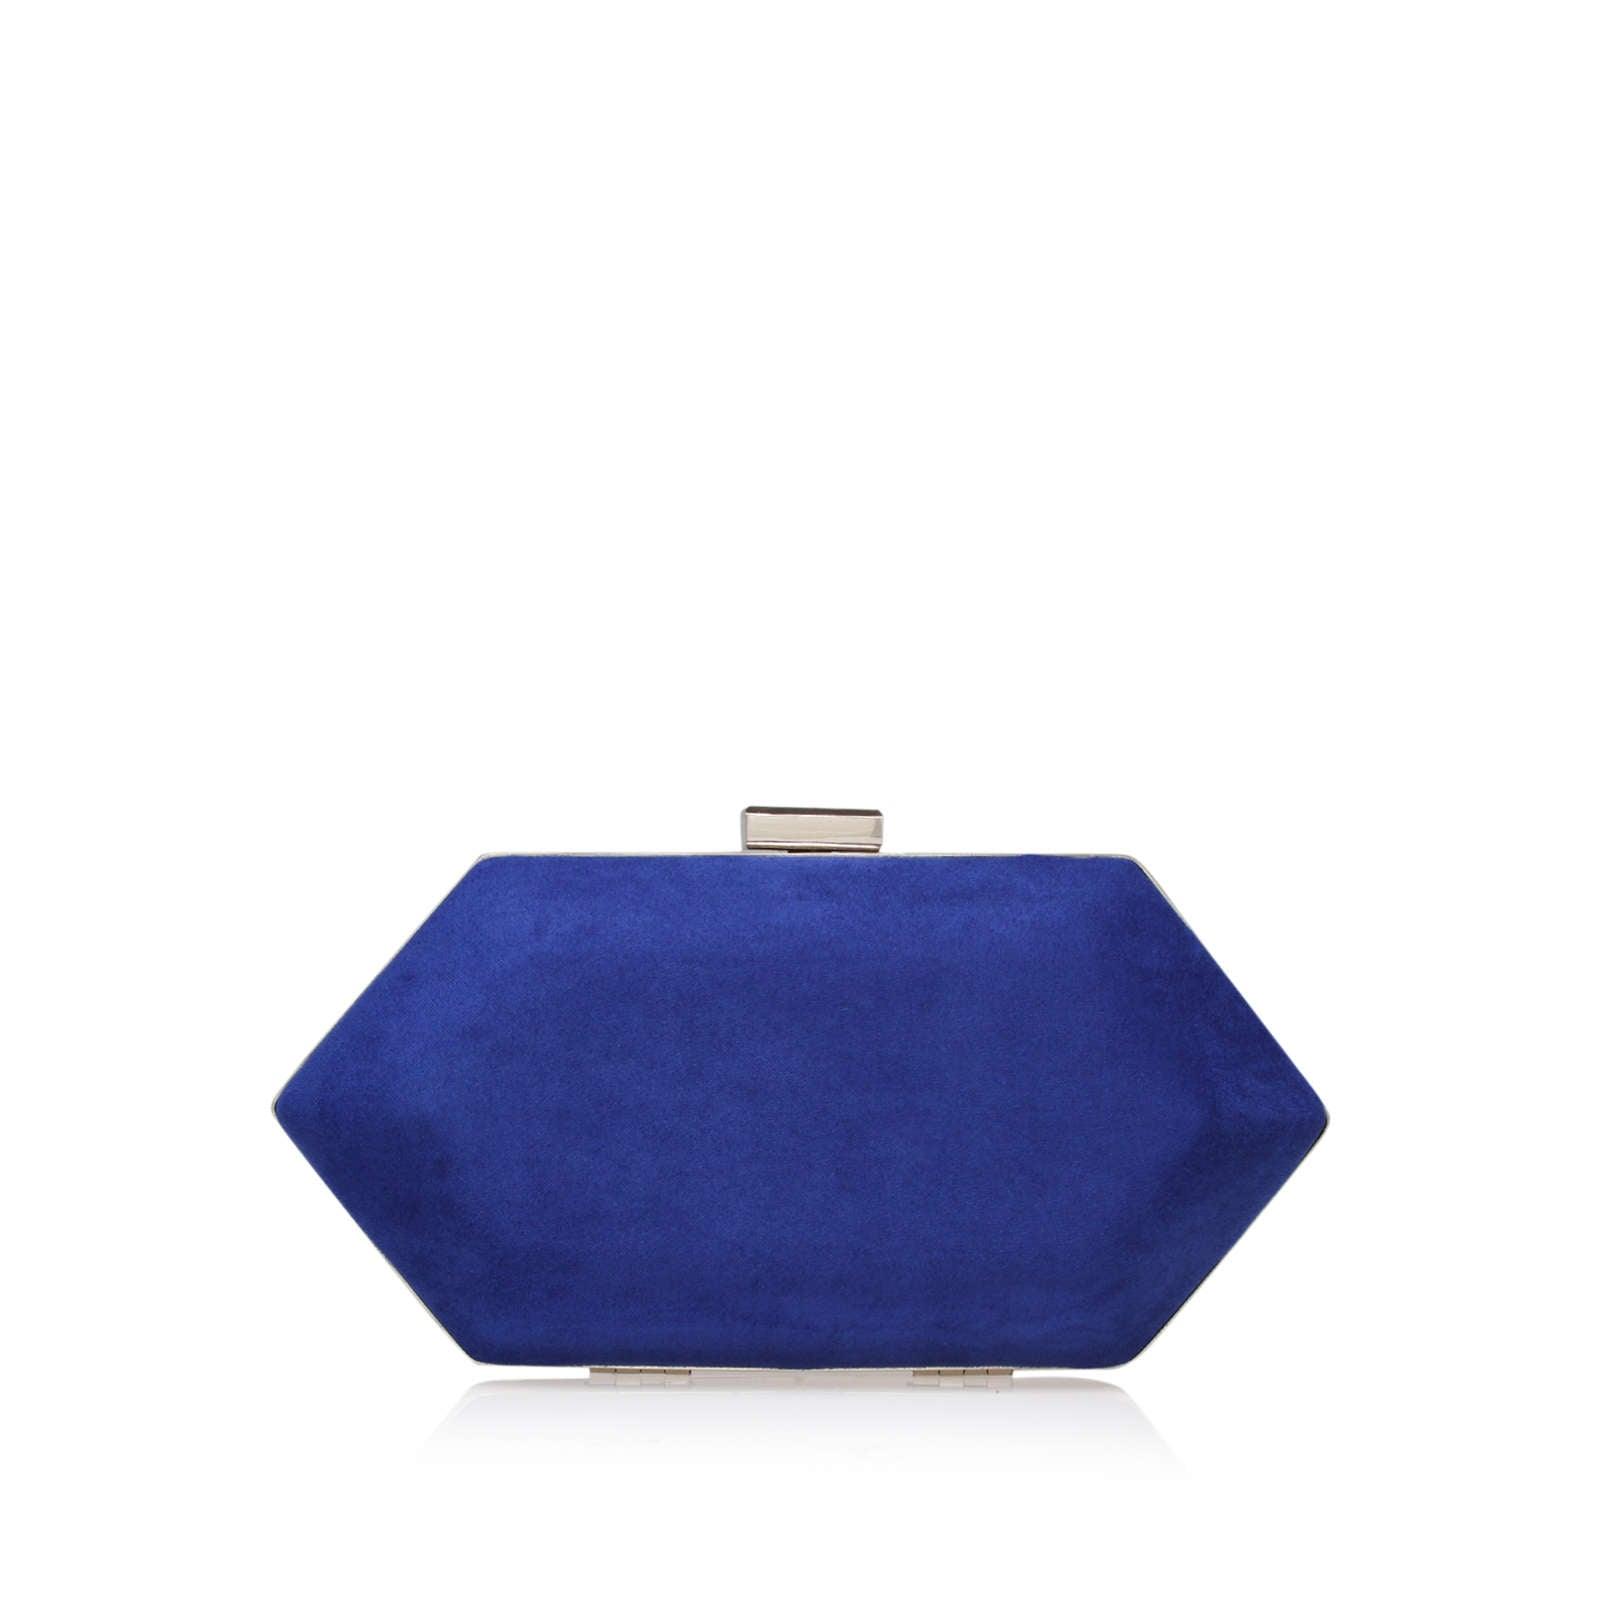 Kurt Geiger Miss KG Jewel 2 Blue Womens Clutch Bag - Stockpoint Apparel Outlet